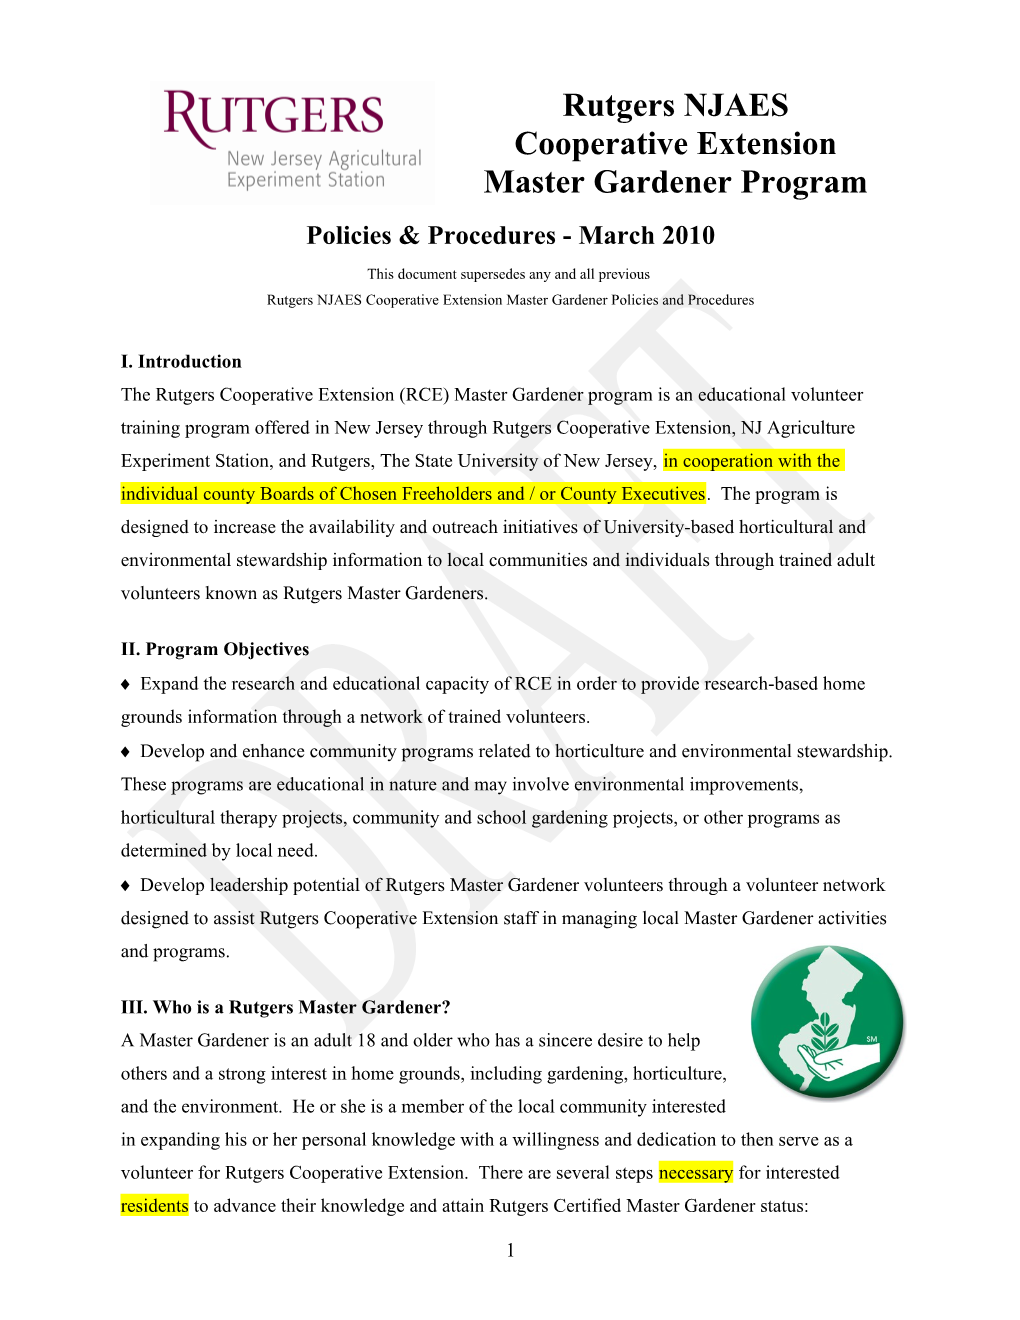 Rutgers University Cooperative Extension Master Gardener Policies